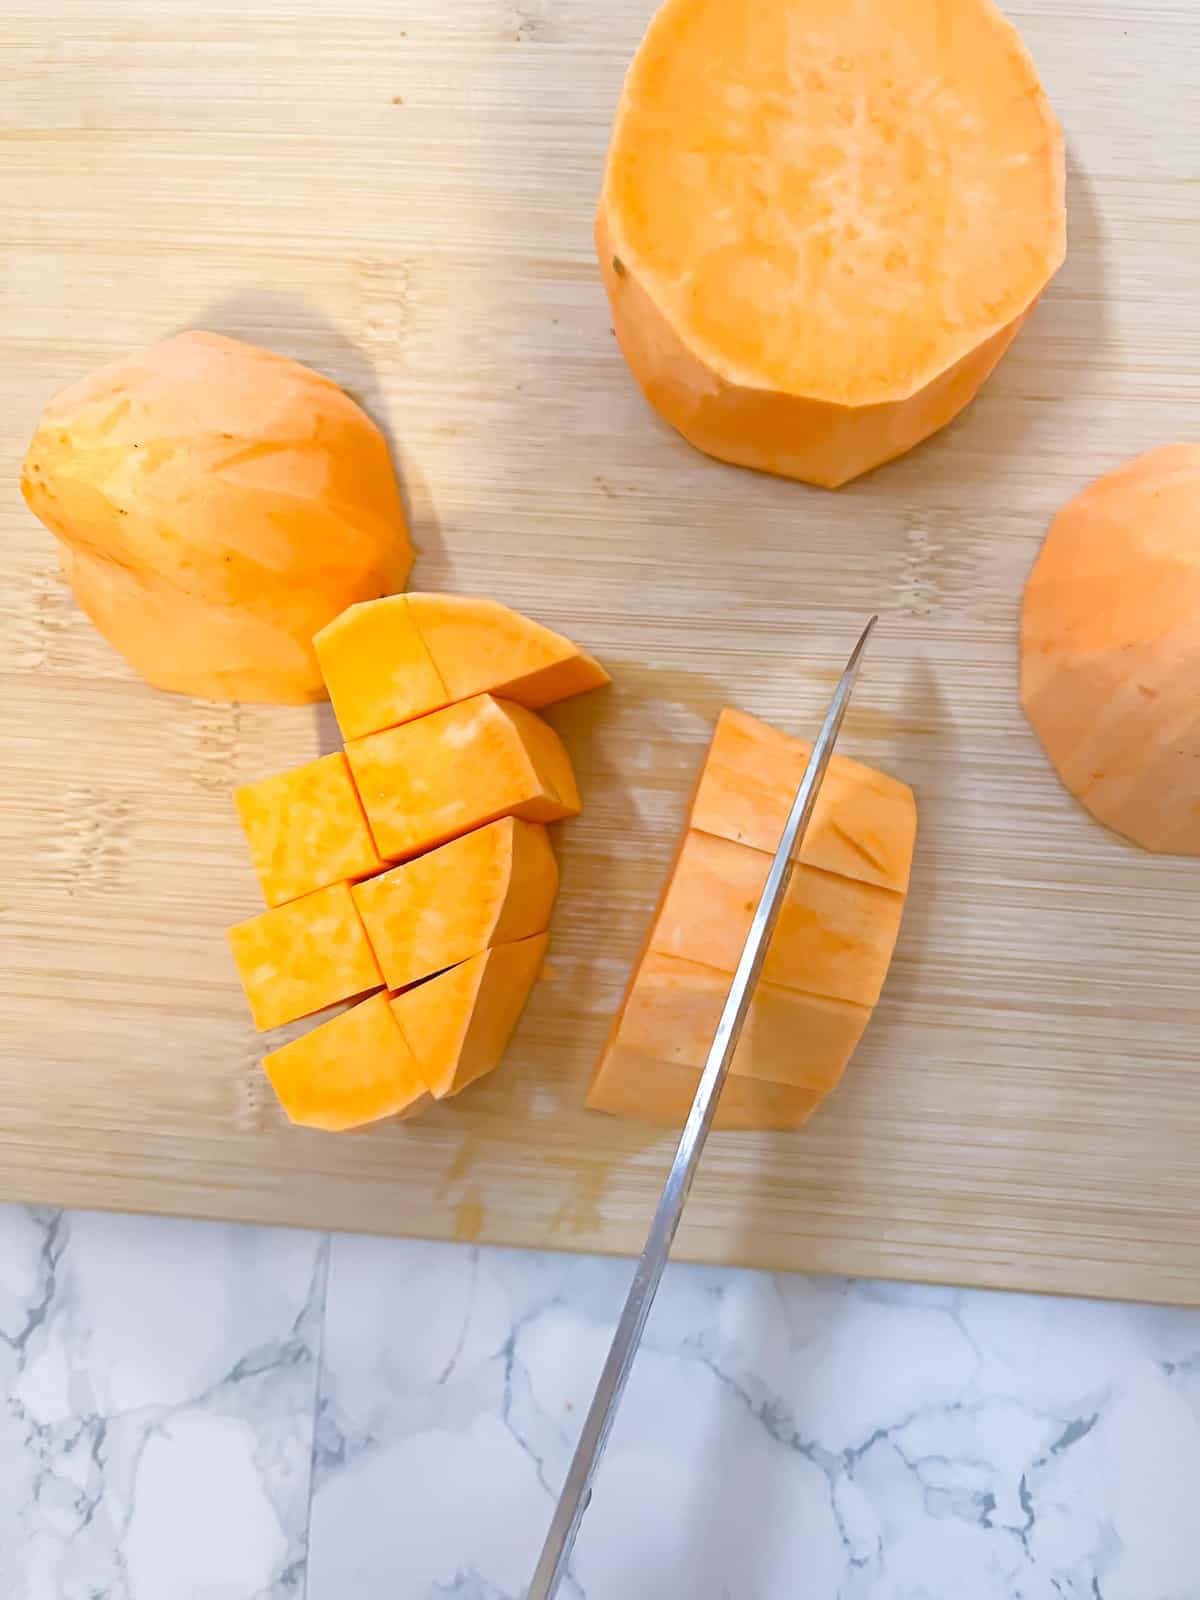 A knife cutting a sweet potato into cubes